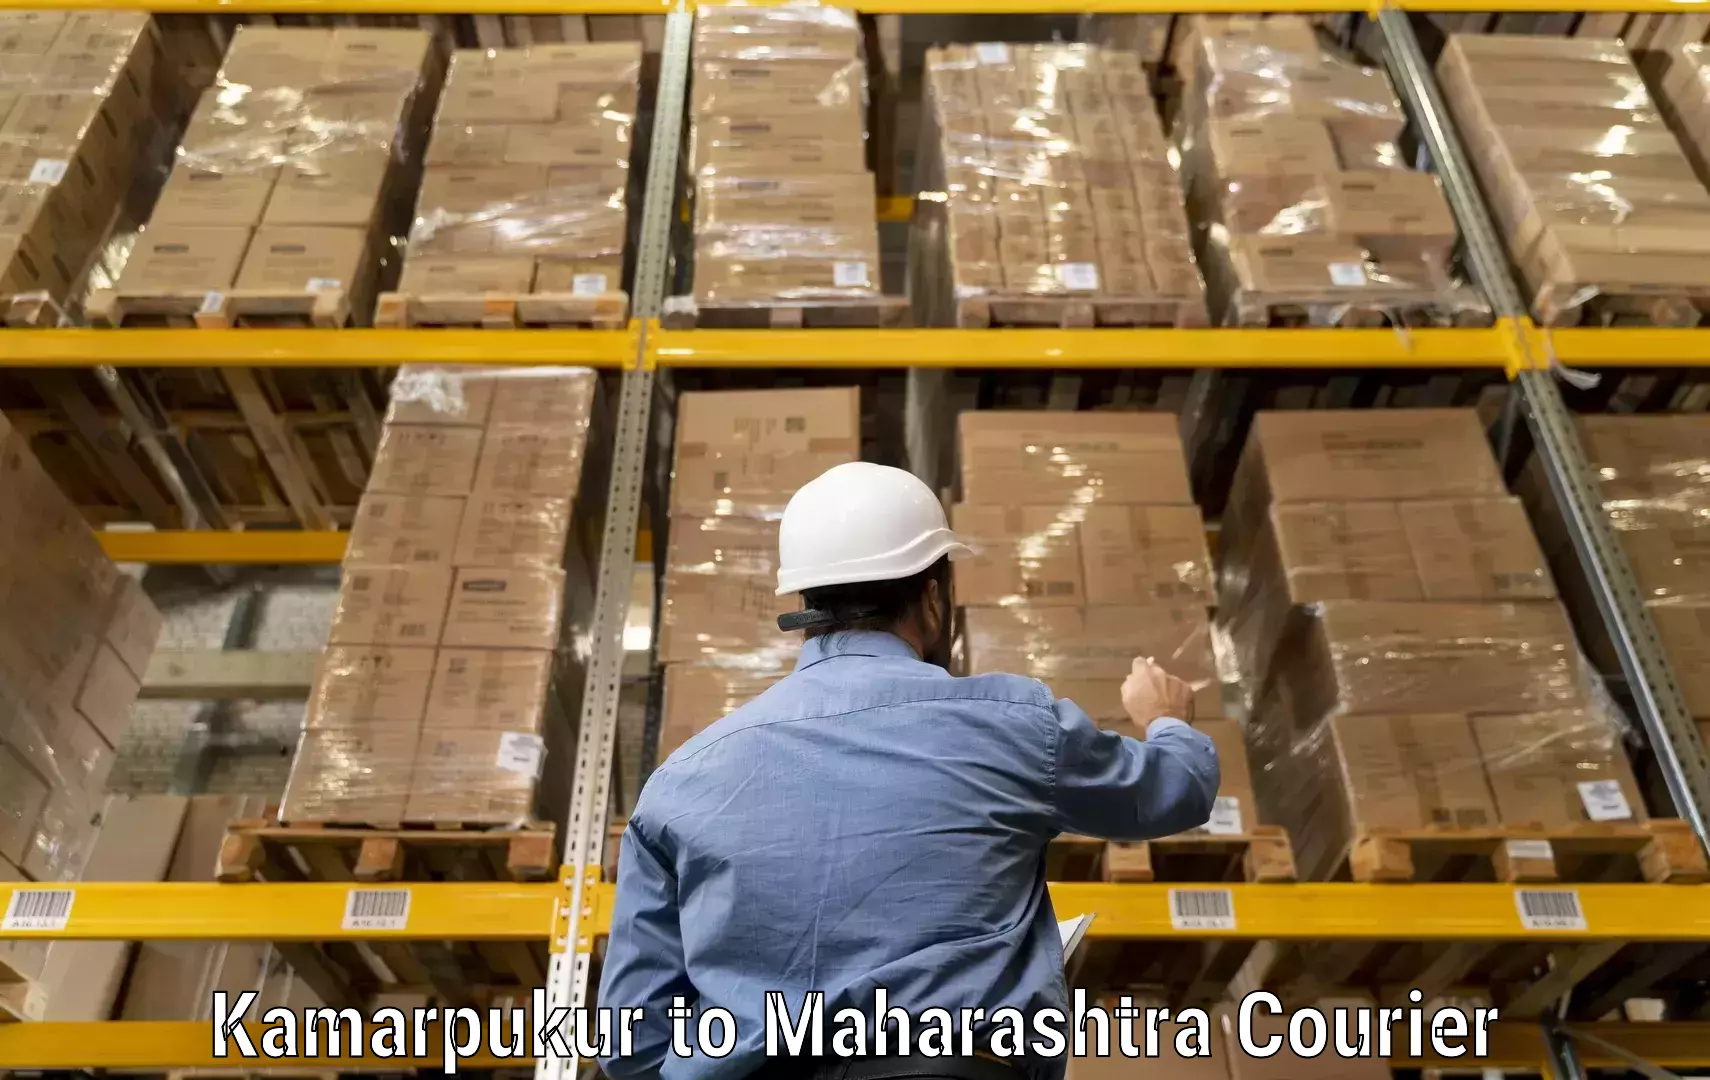 Reliable delivery network Kamarpukur to Maharashtra